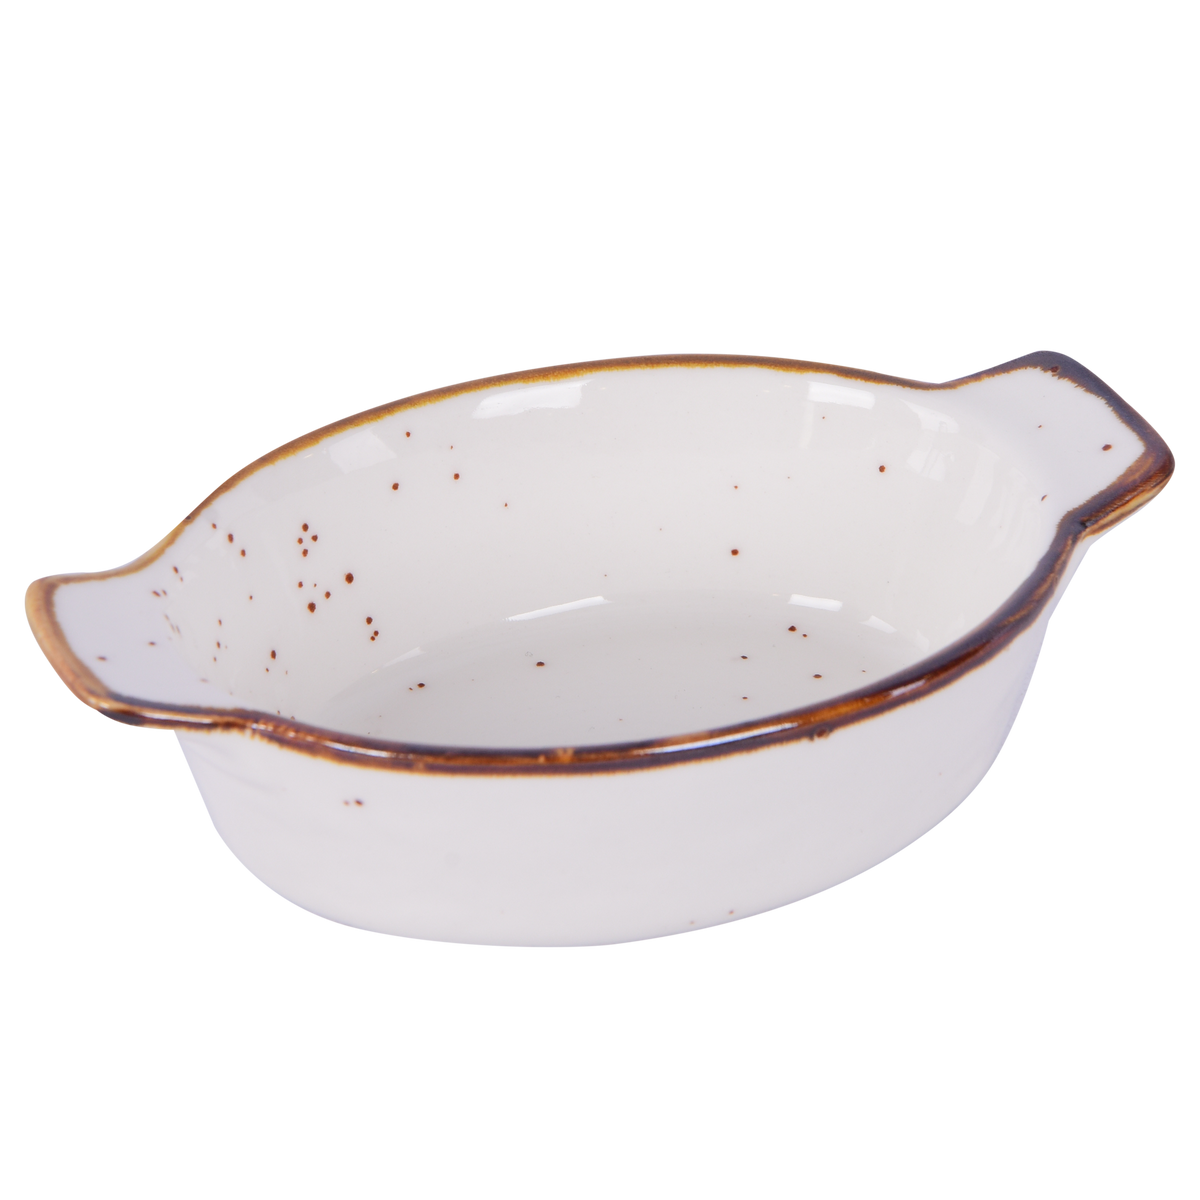 Round dish with handles, White